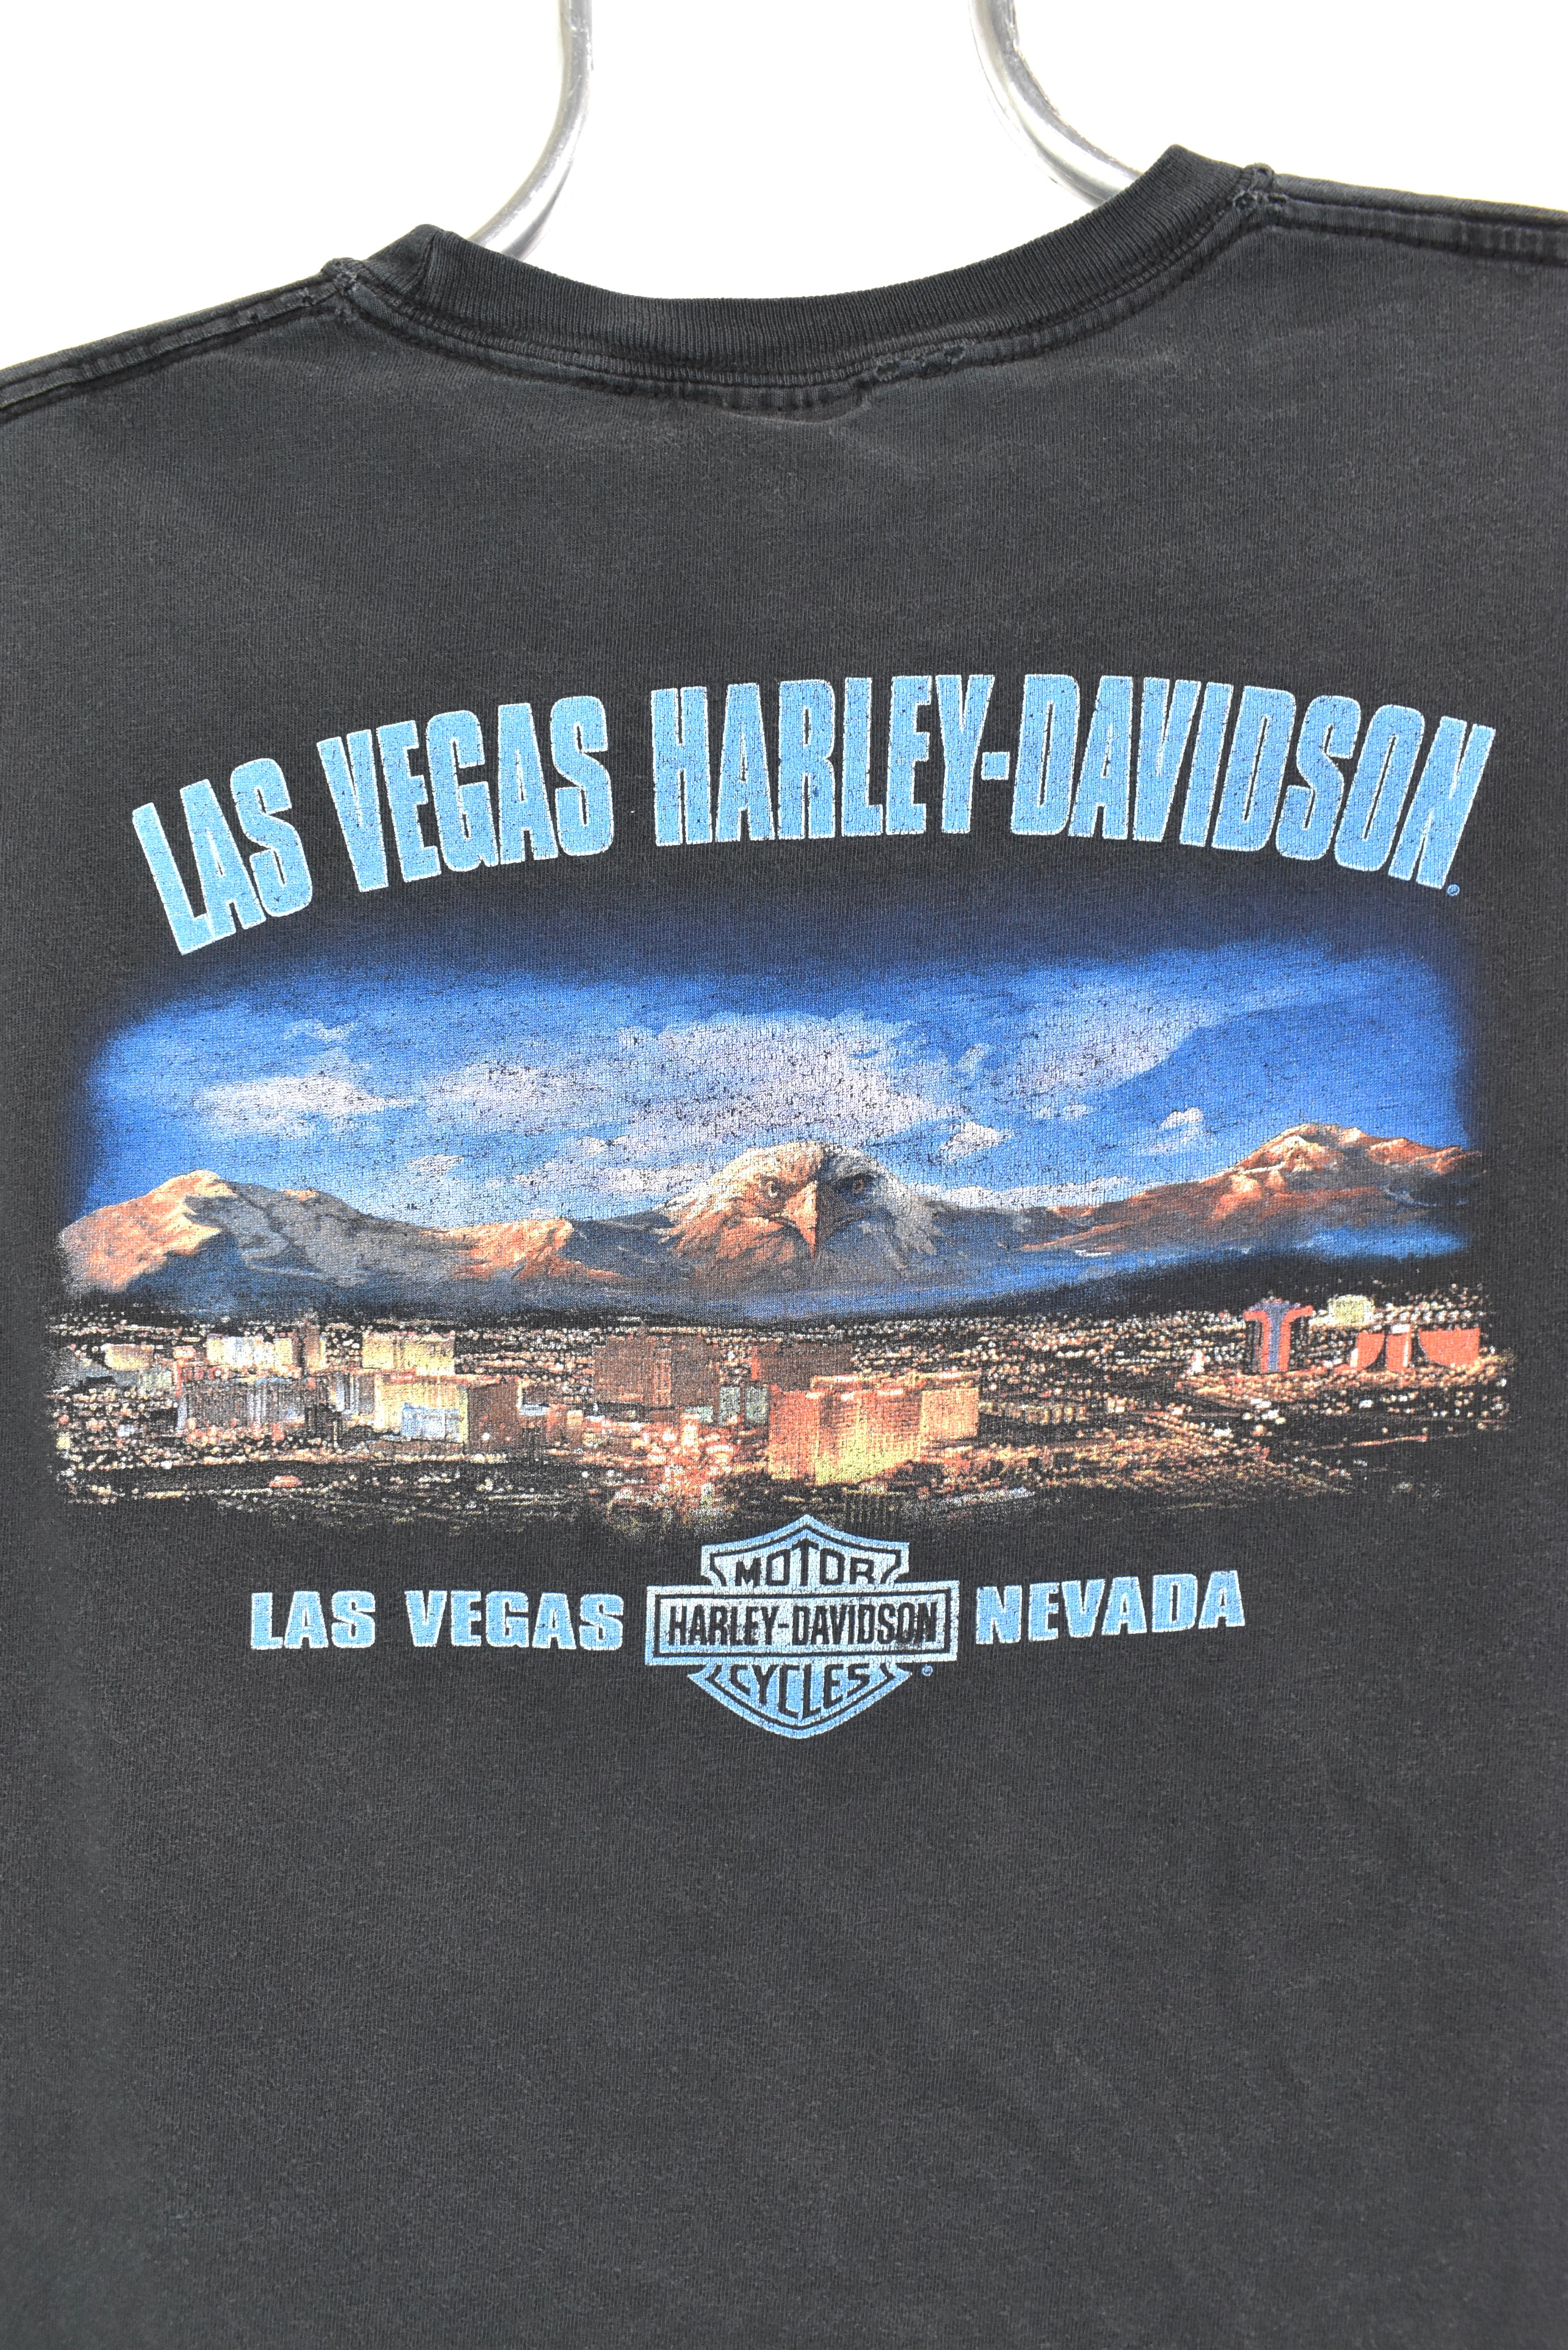 Vintage Harley Davidson shirt, 2002 black graphic tee - AU L HARLEY DAVIDSON